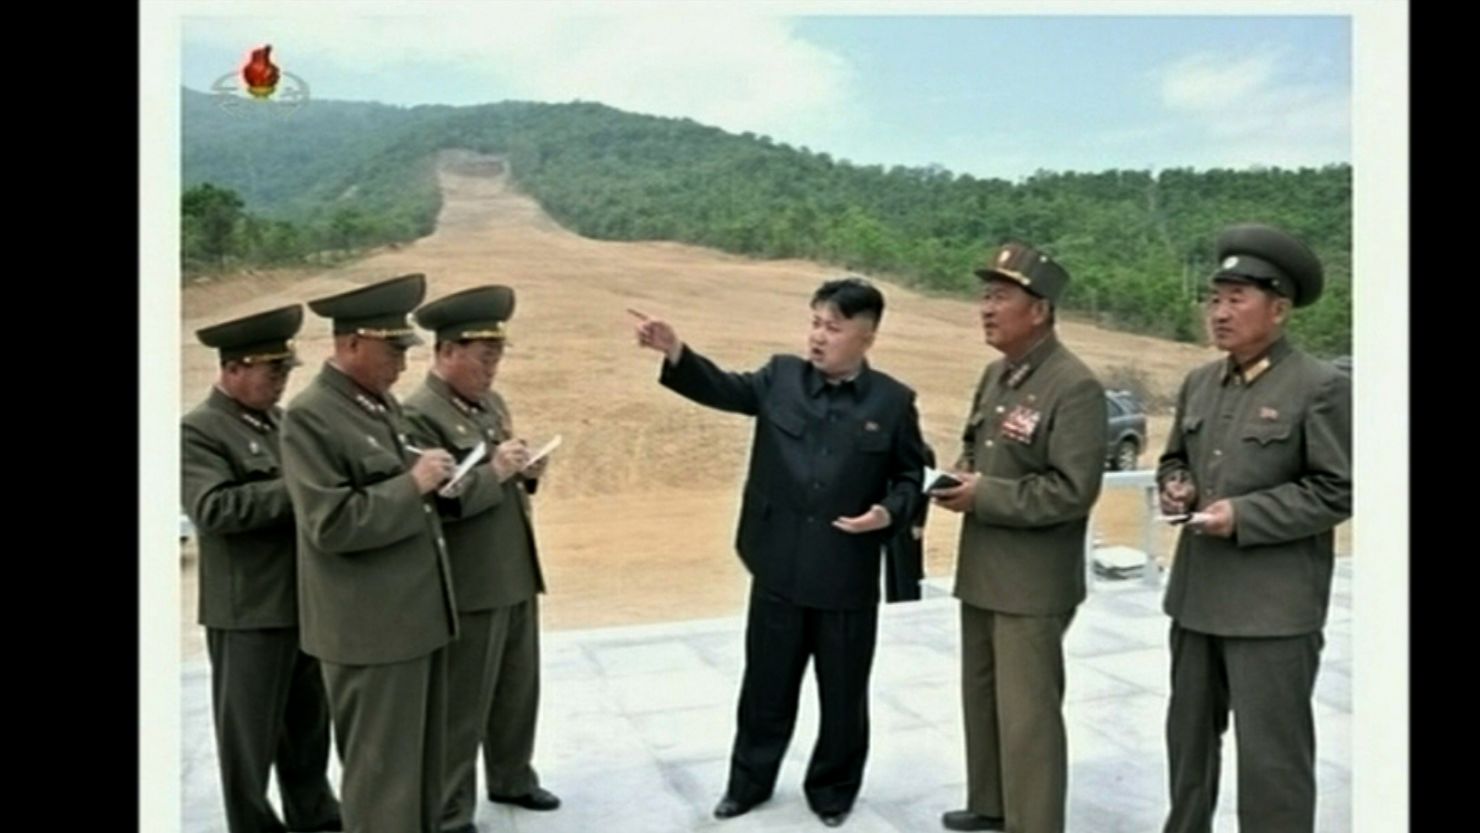 North Korea media reports said Kim Jong Un provided guidance on how to build the ski resort.